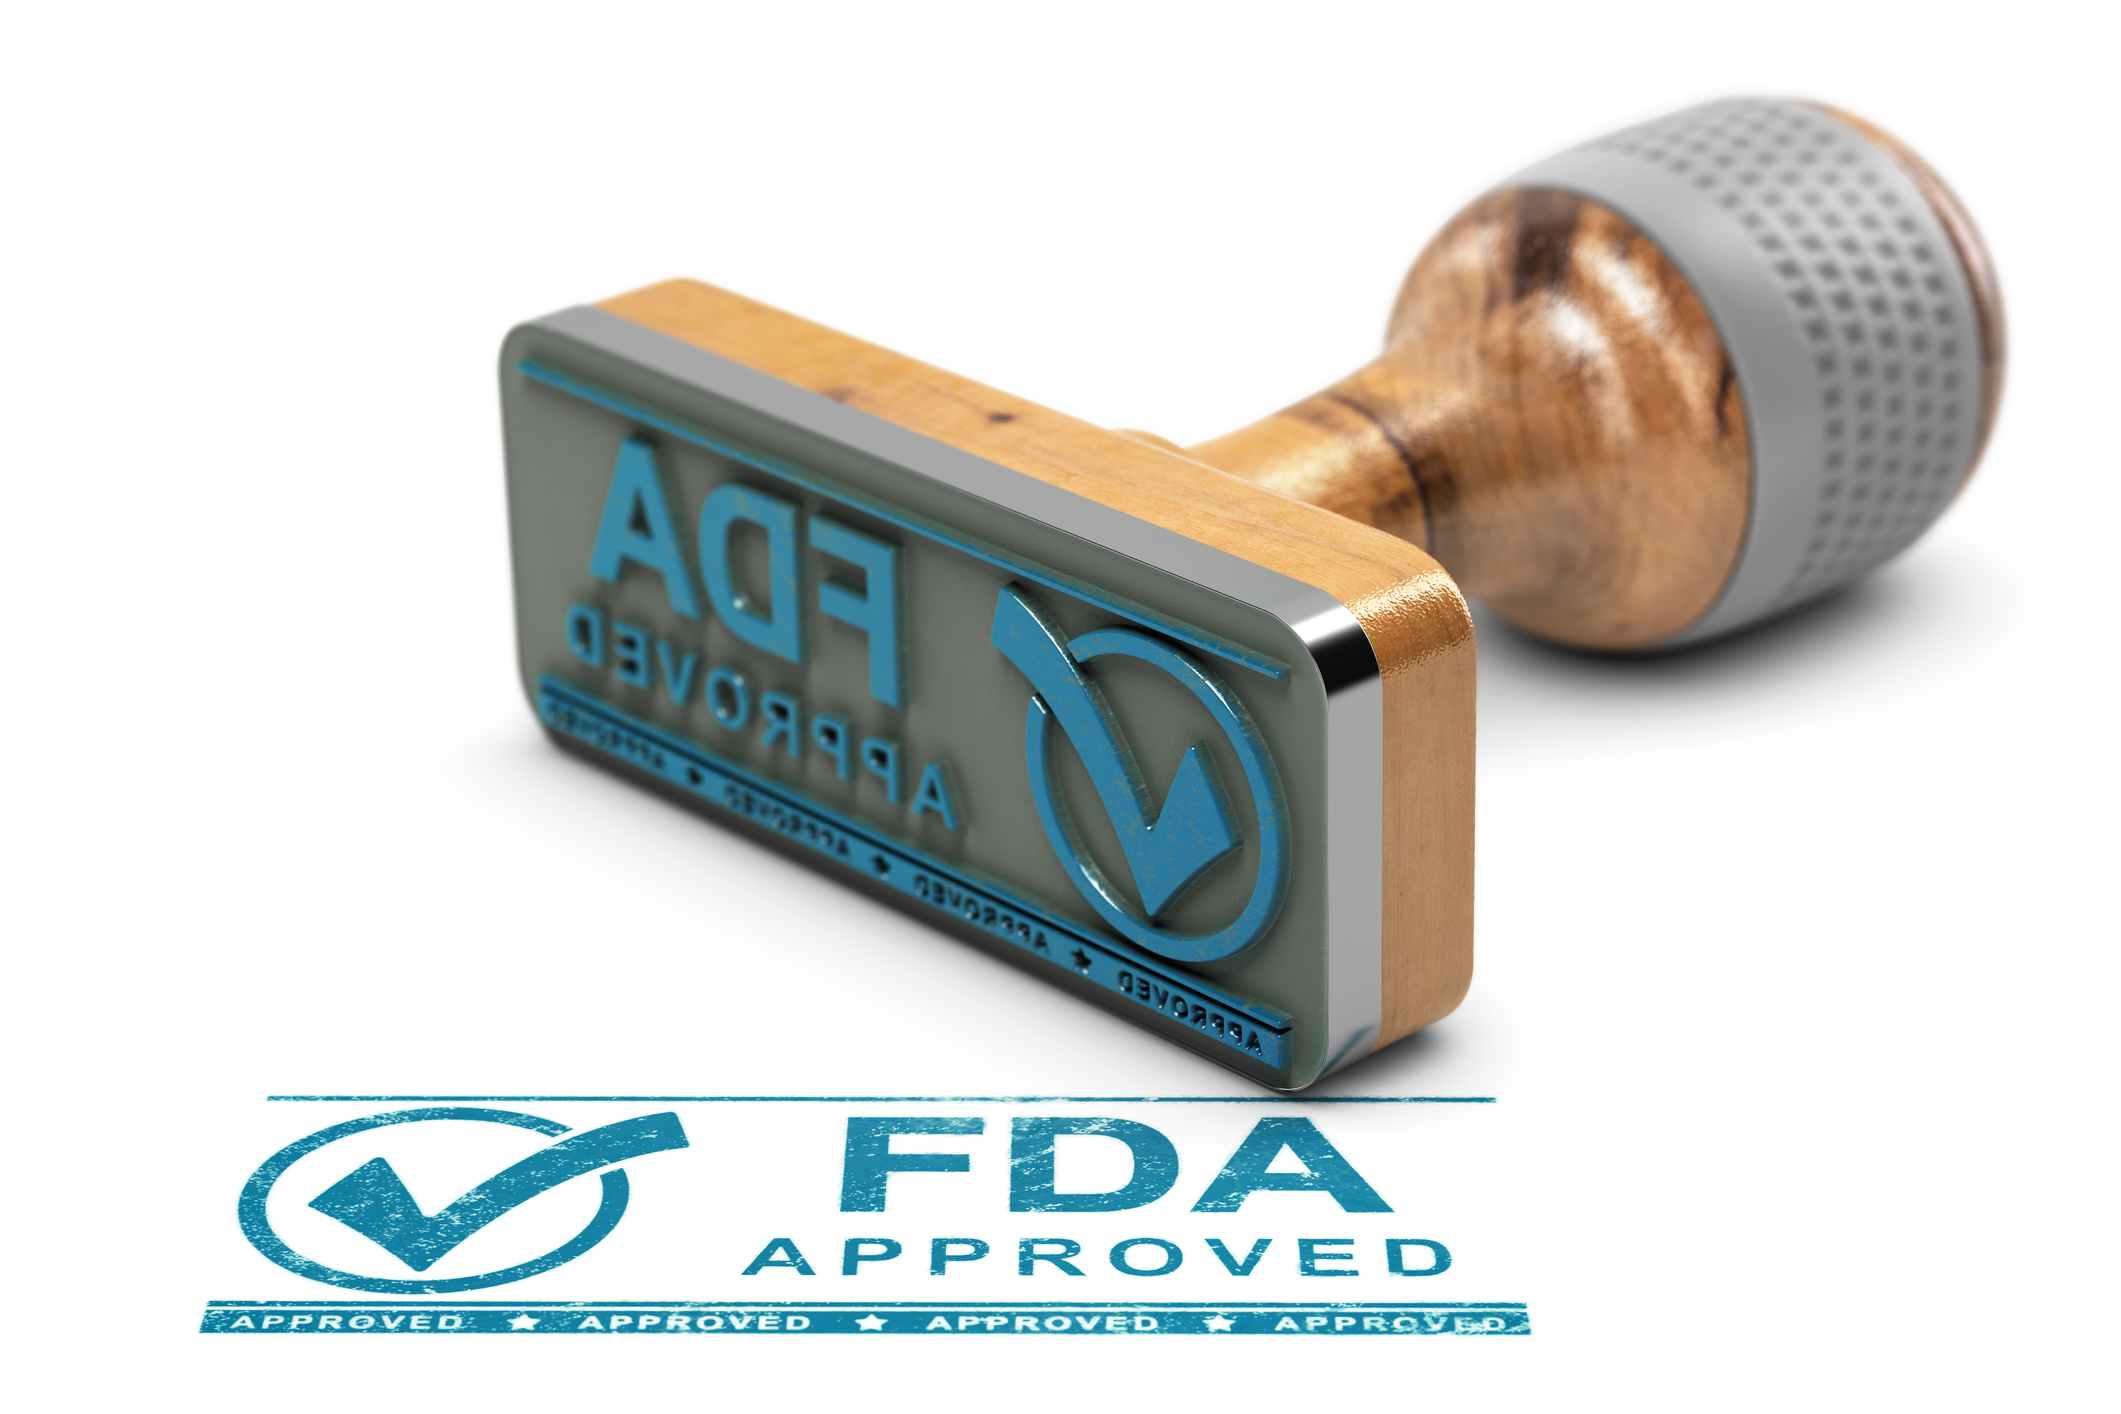 Curaleaf Responds to FDA Warning Over CBD Product Marketing